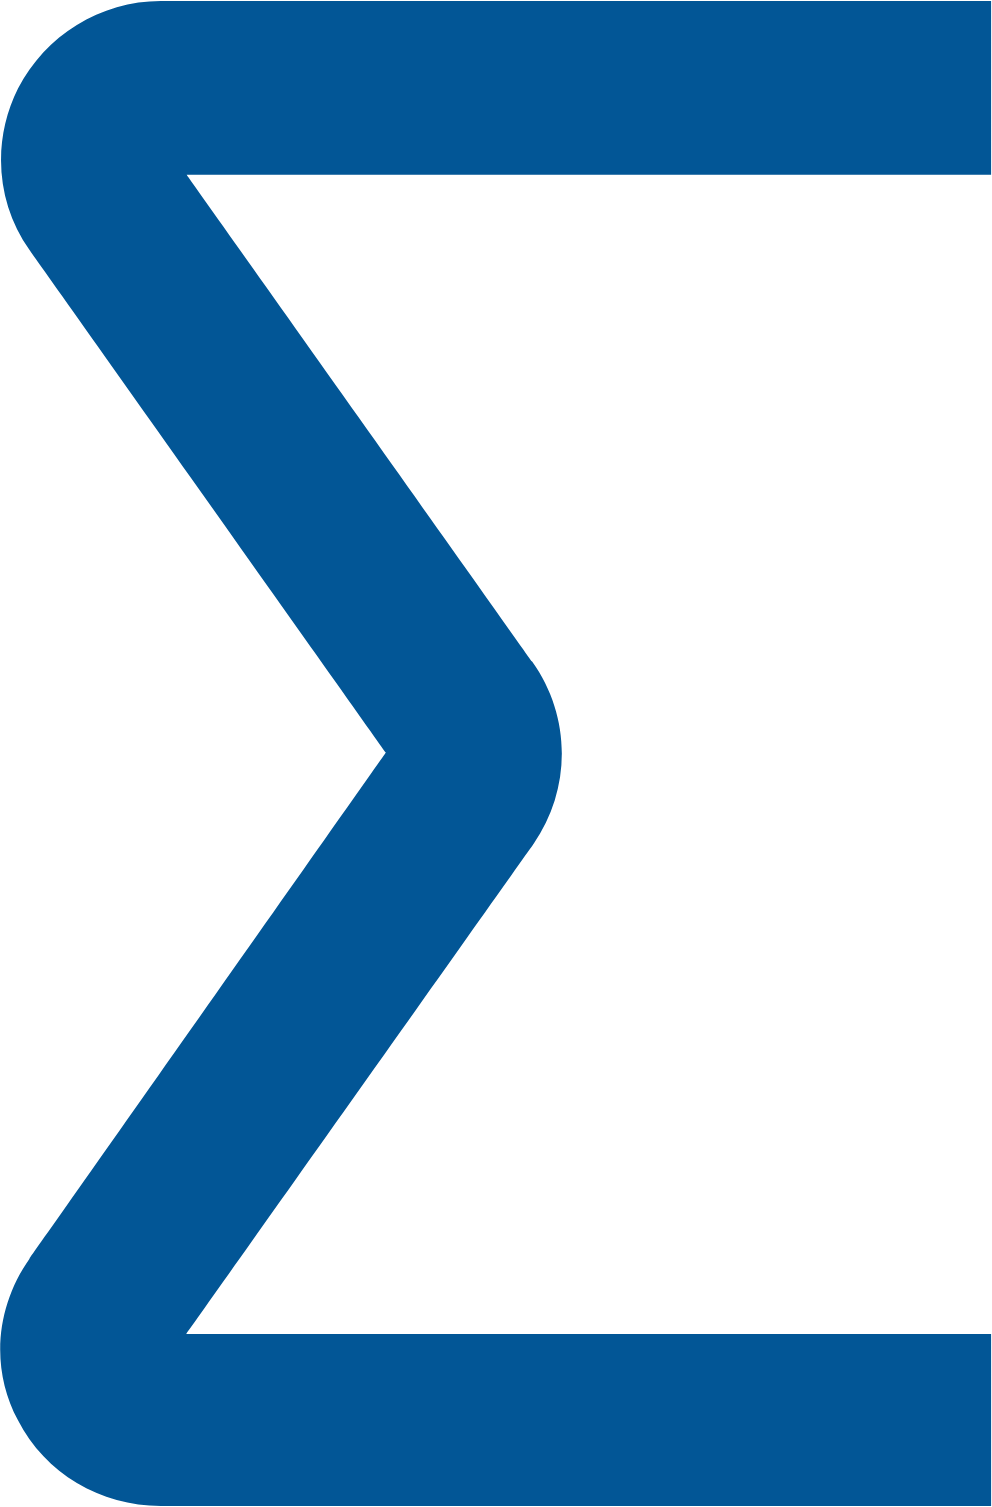 Sellas Life Sciences logo (PNG transparent)